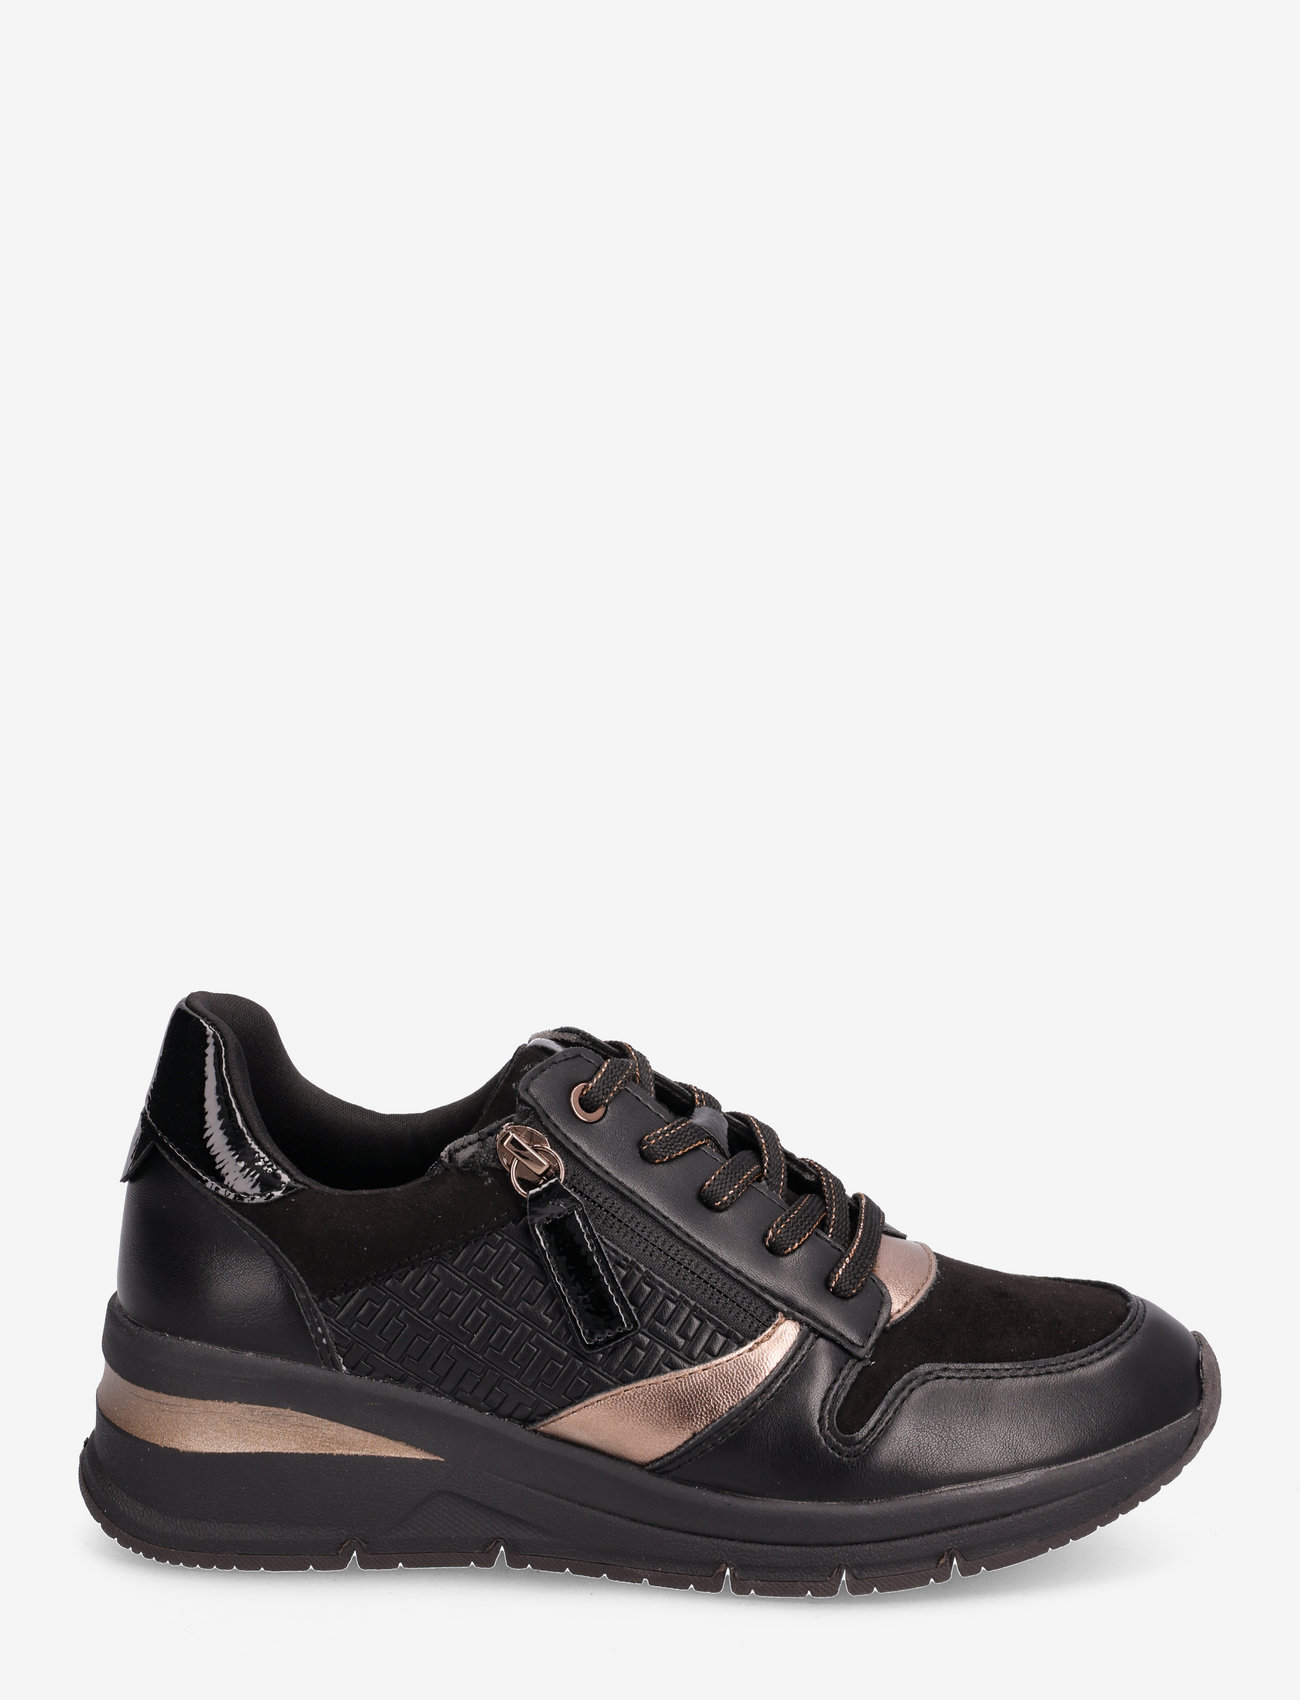 Tamaris - Women Lace-up - low top sneakers - black/copper - 1